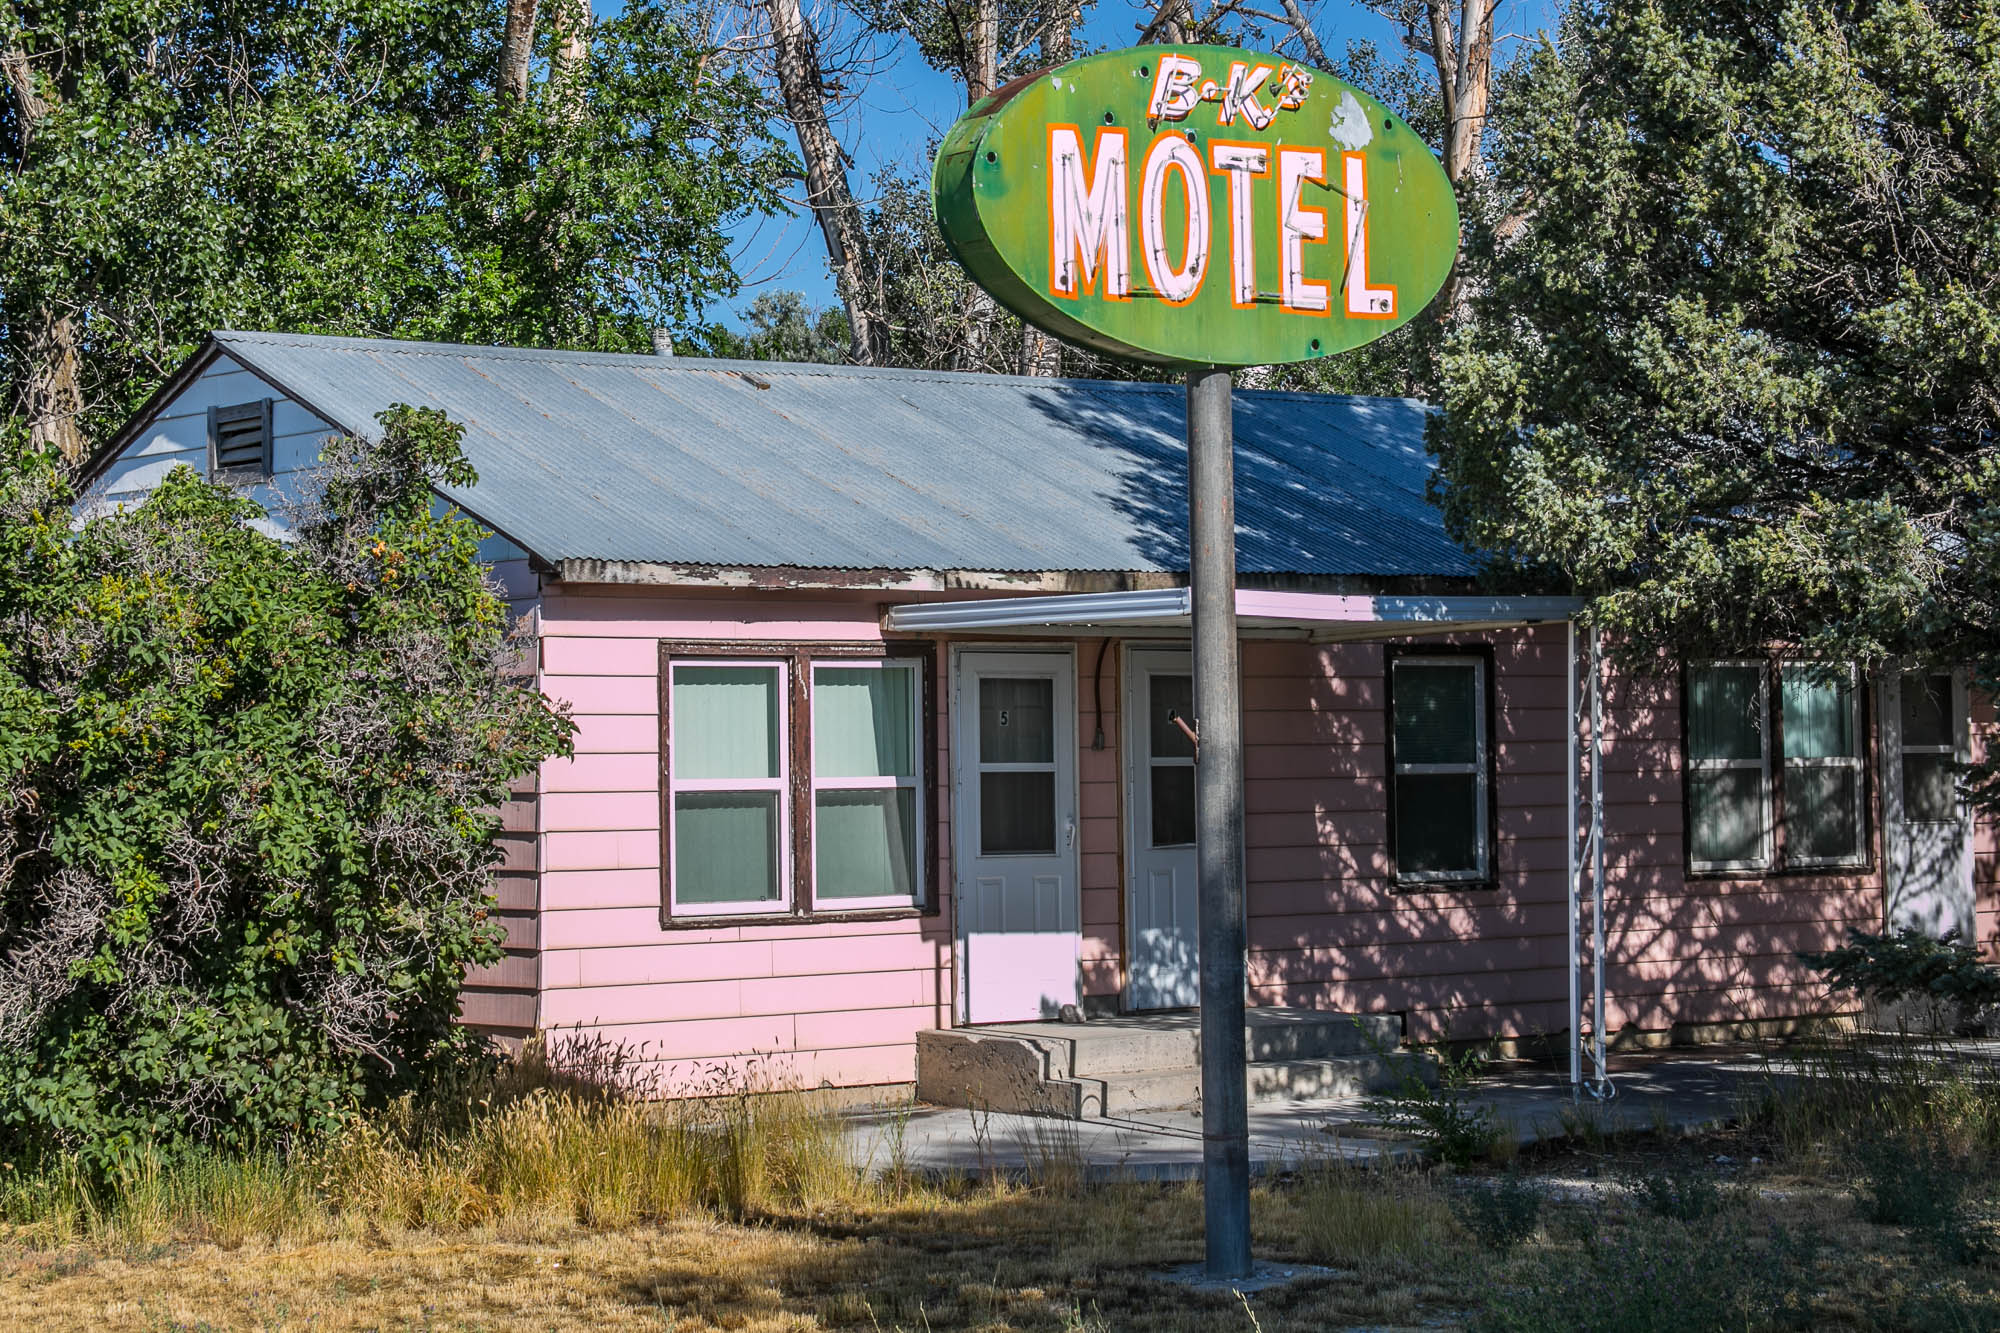 BK's Motel - Mud Lake, Idaho U.S.A. - July 28, 2017